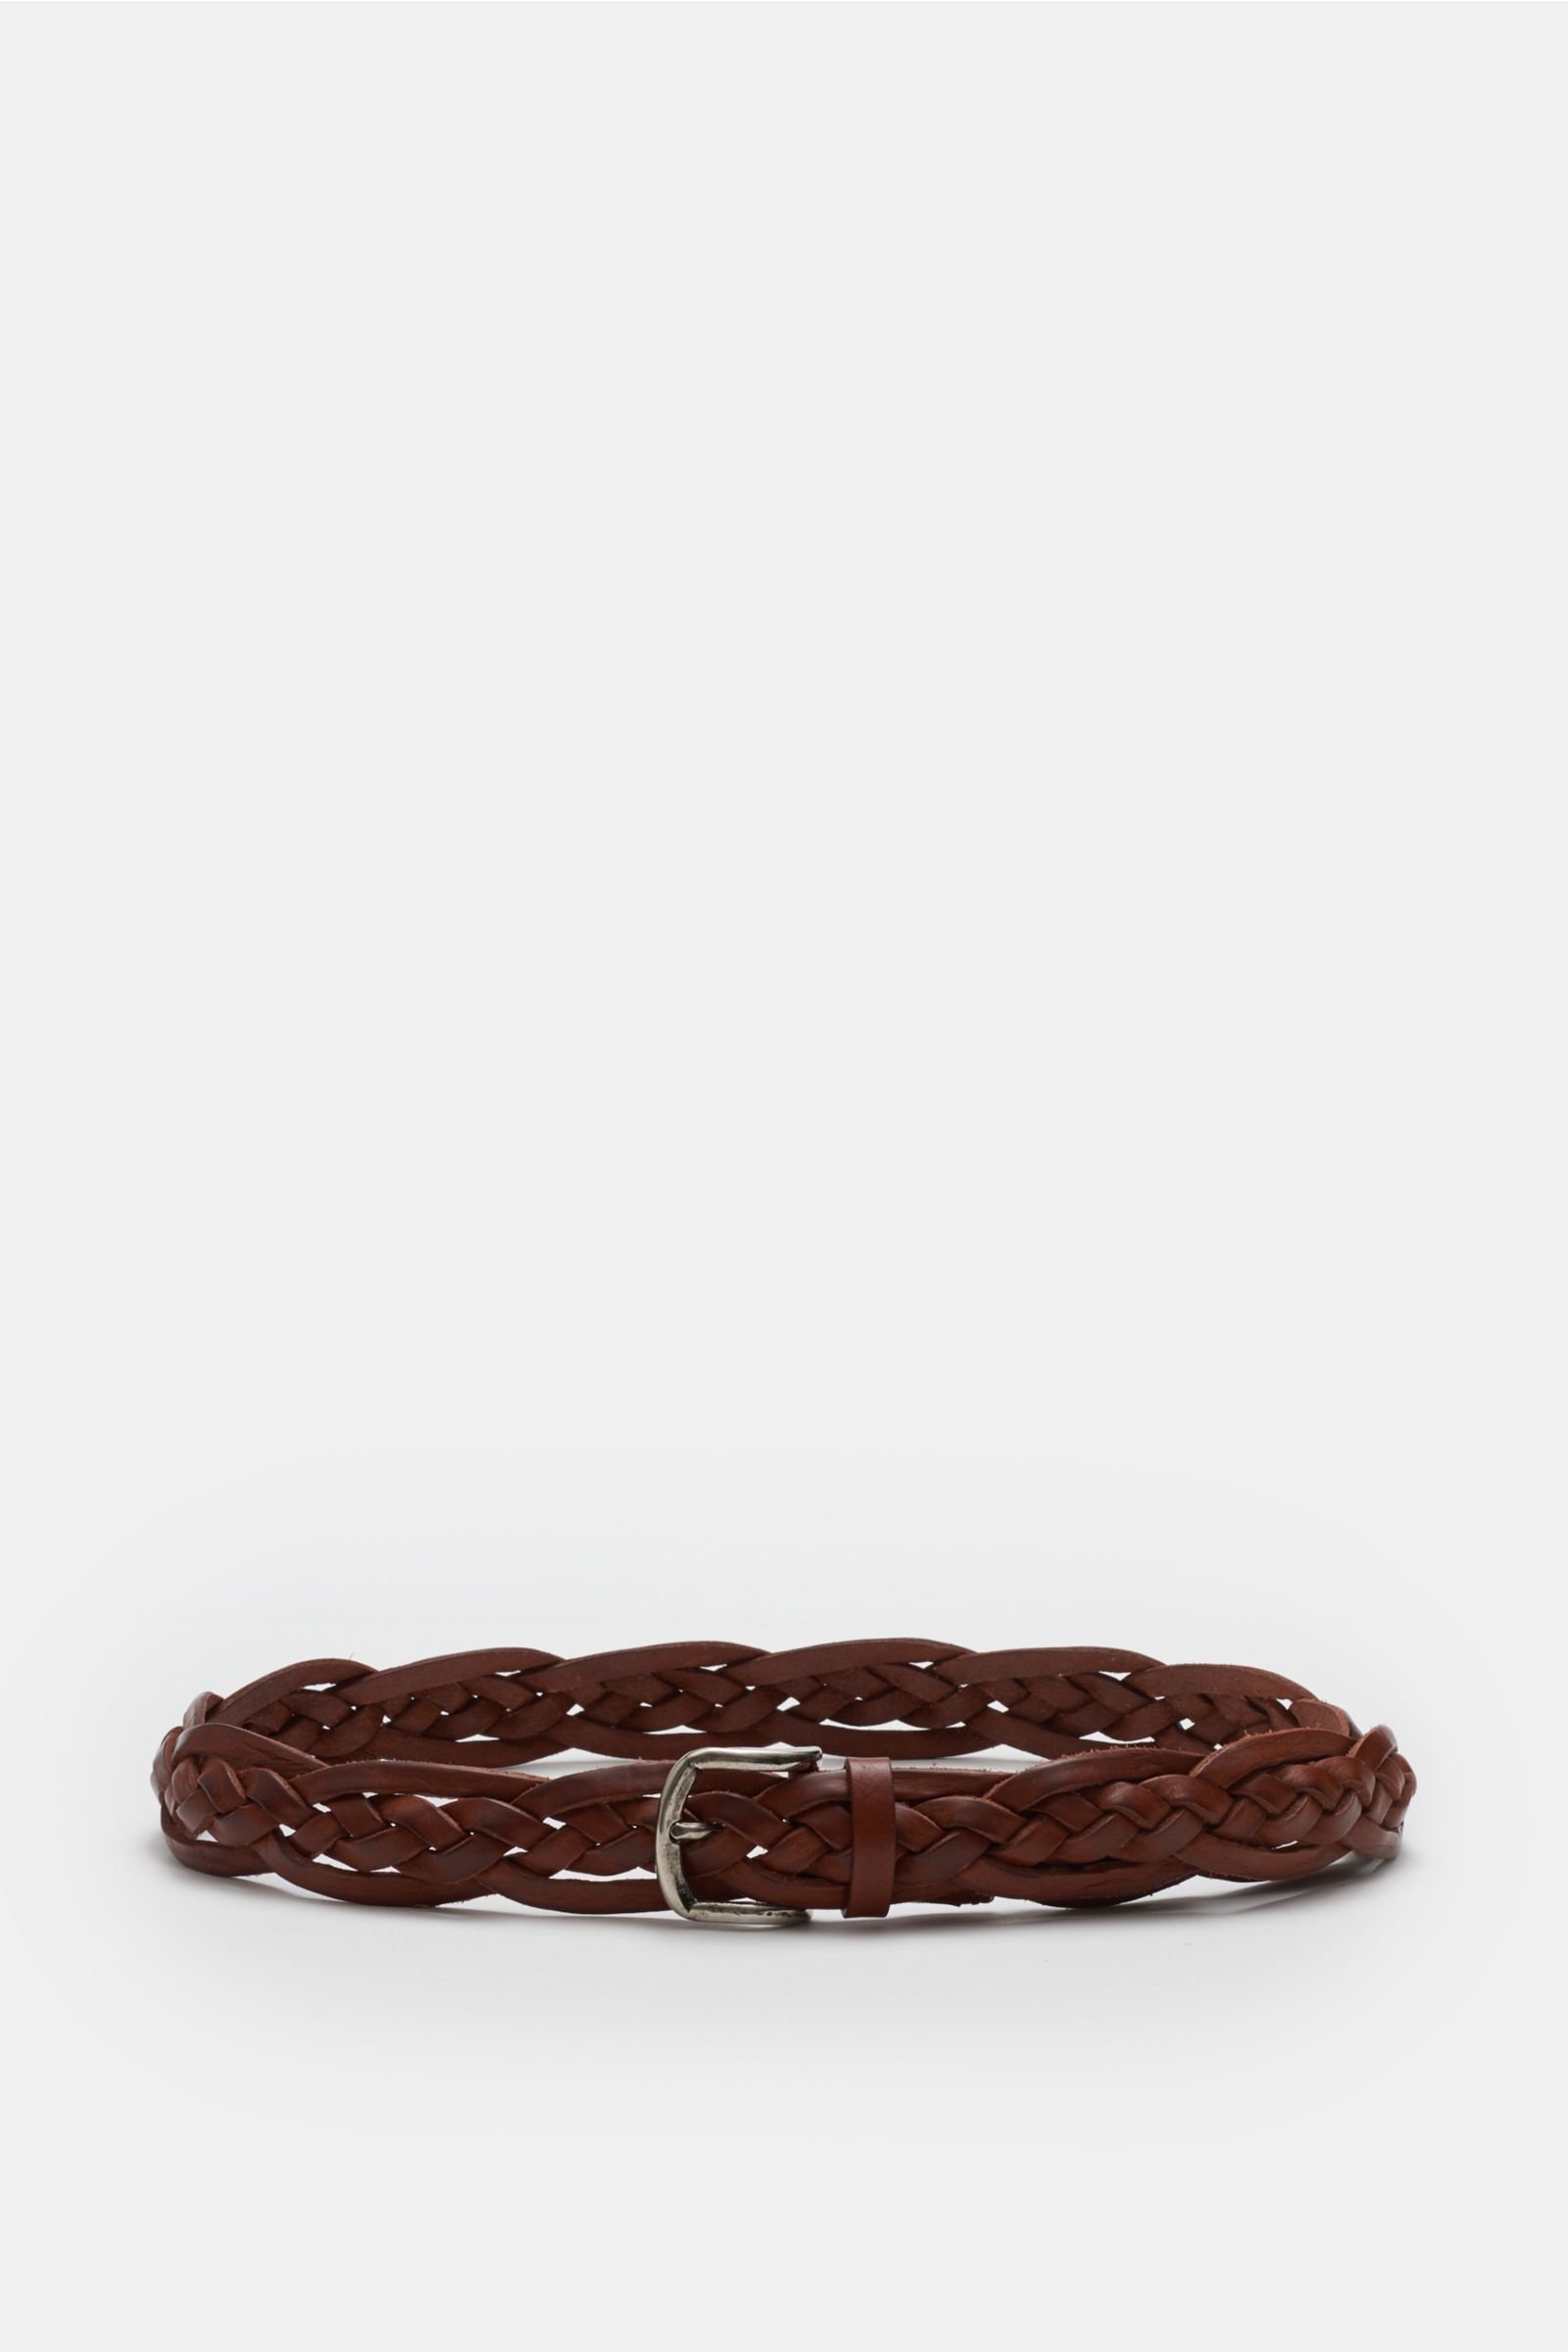 Braided belt rust brown